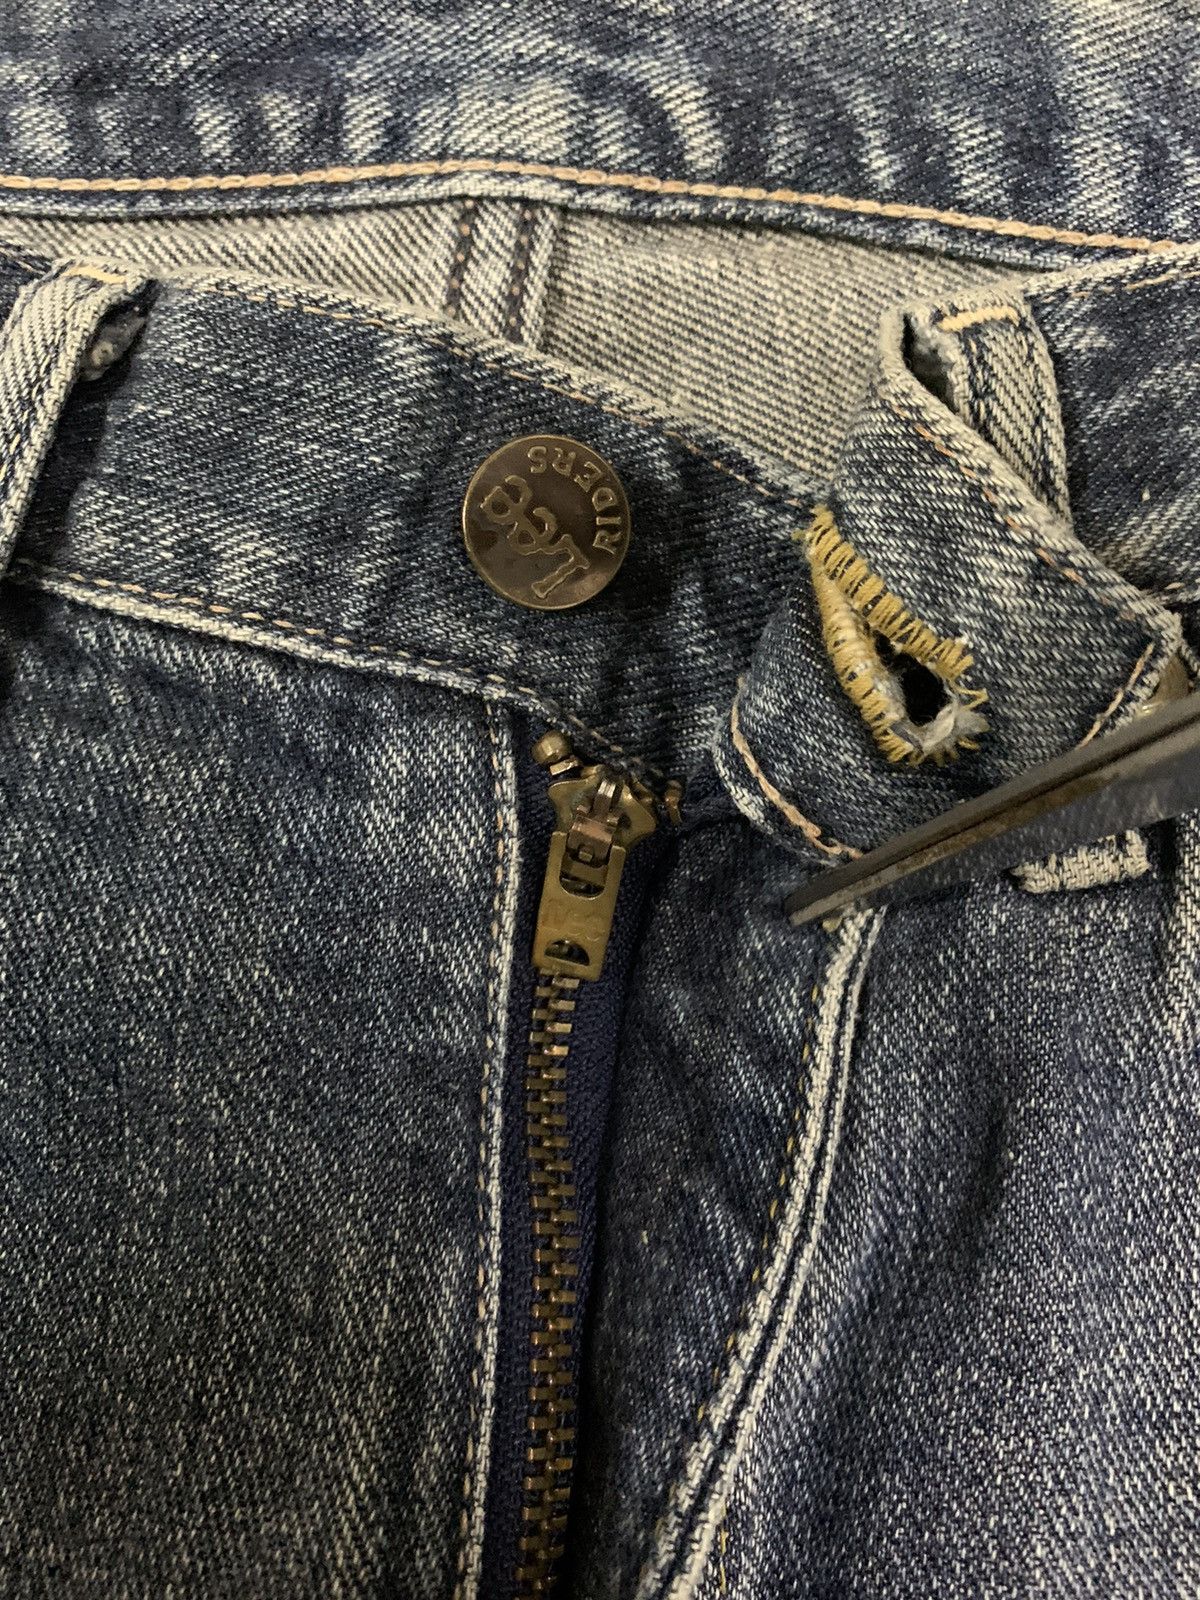 Lee Vintage Lee Cowboy Sanforized Distressed Flared Jeans Size US 31 - 4 Thumbnail